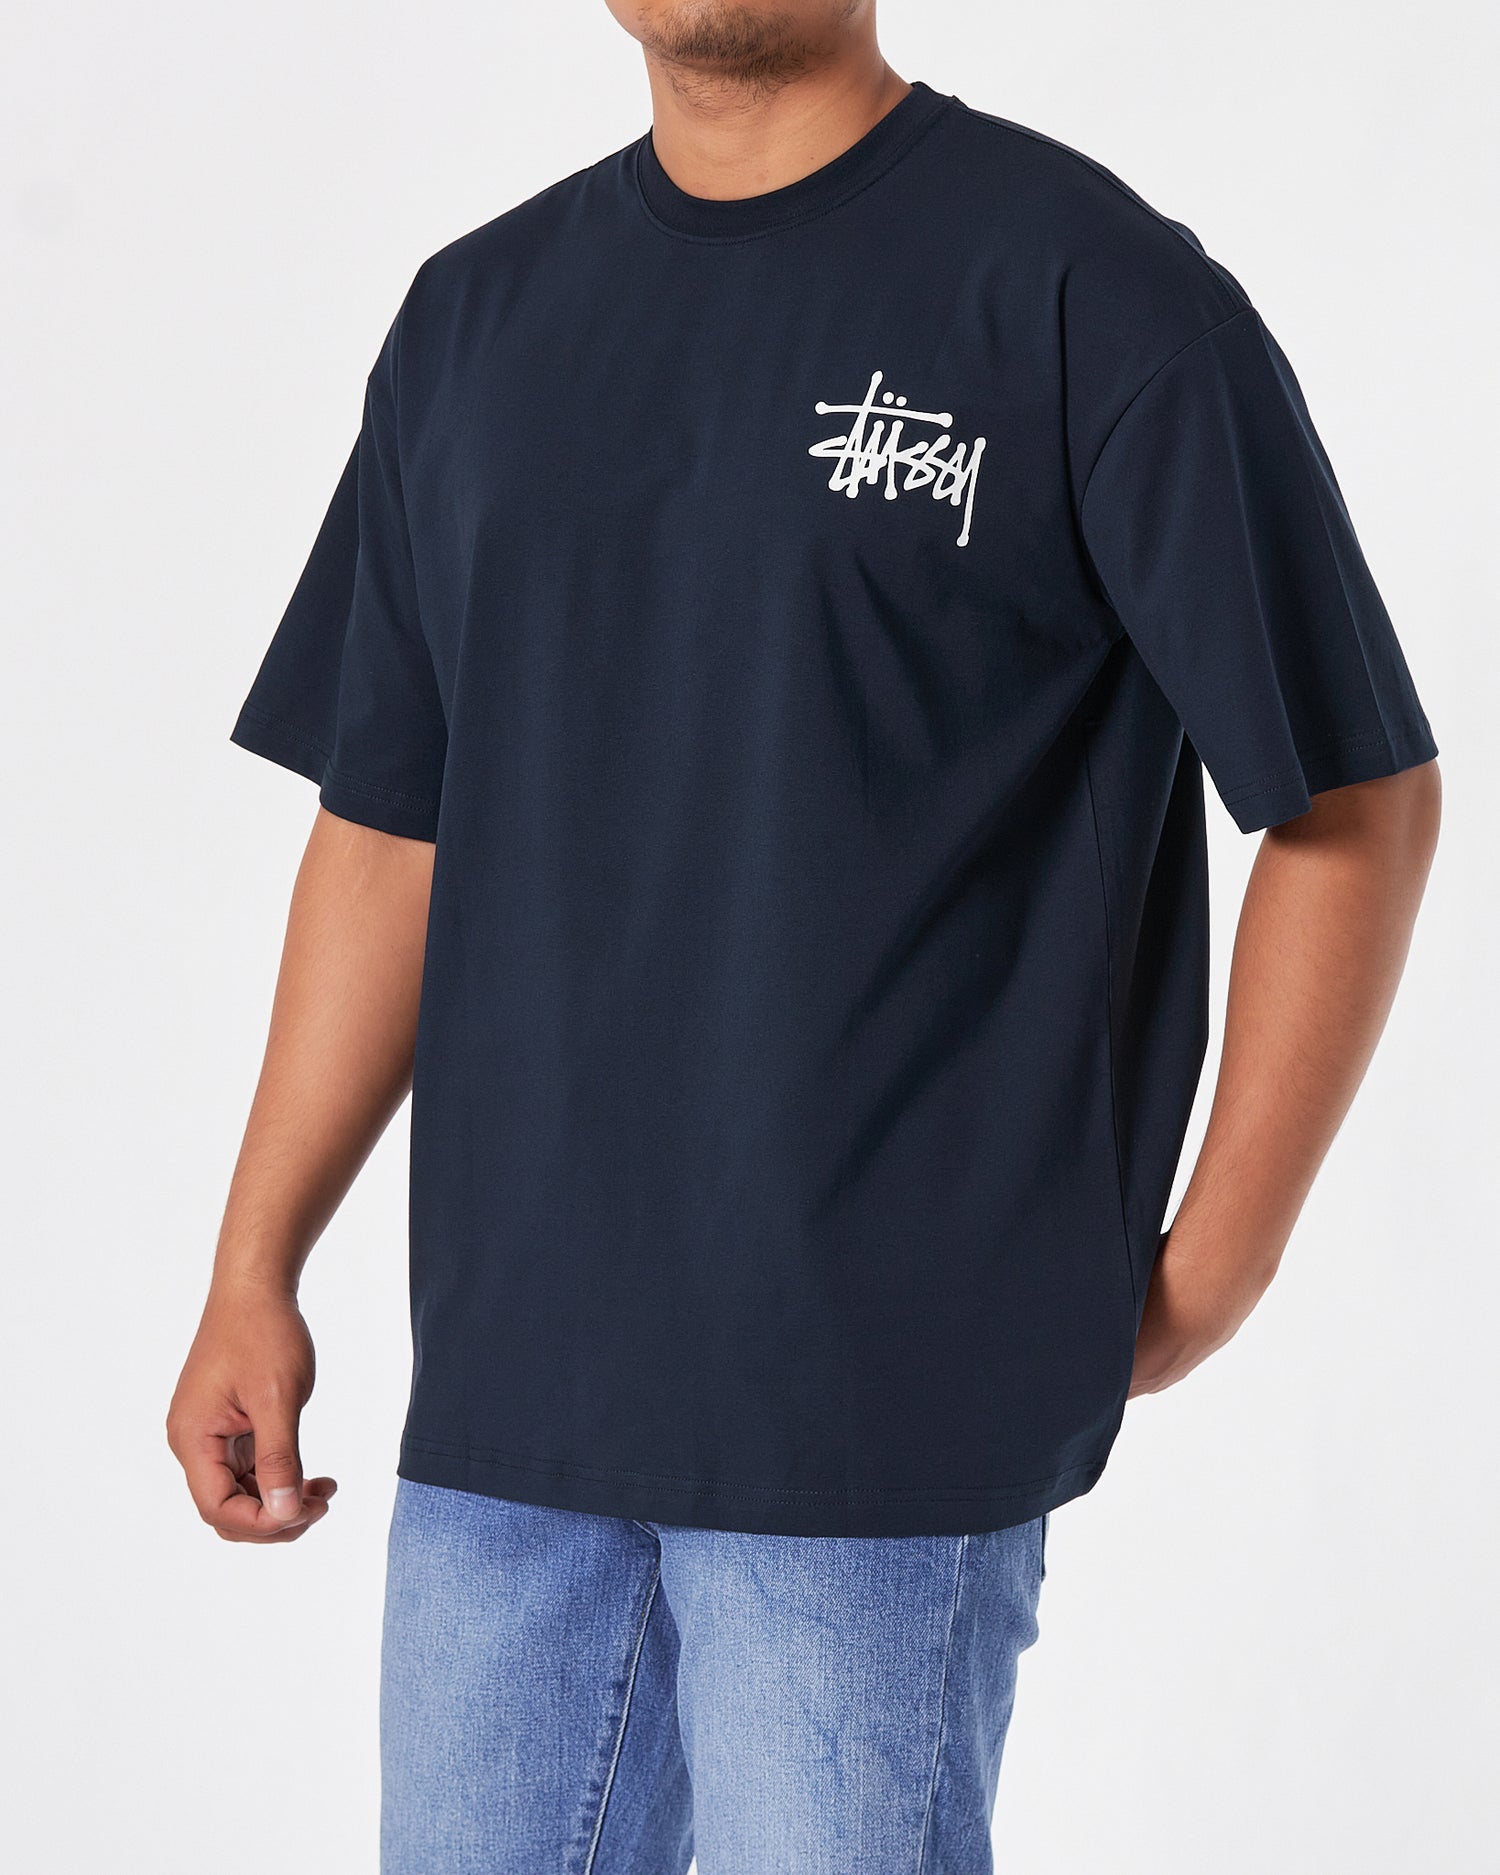 STU Front Back Logo Printed Men Blue T-Shirt 20.90